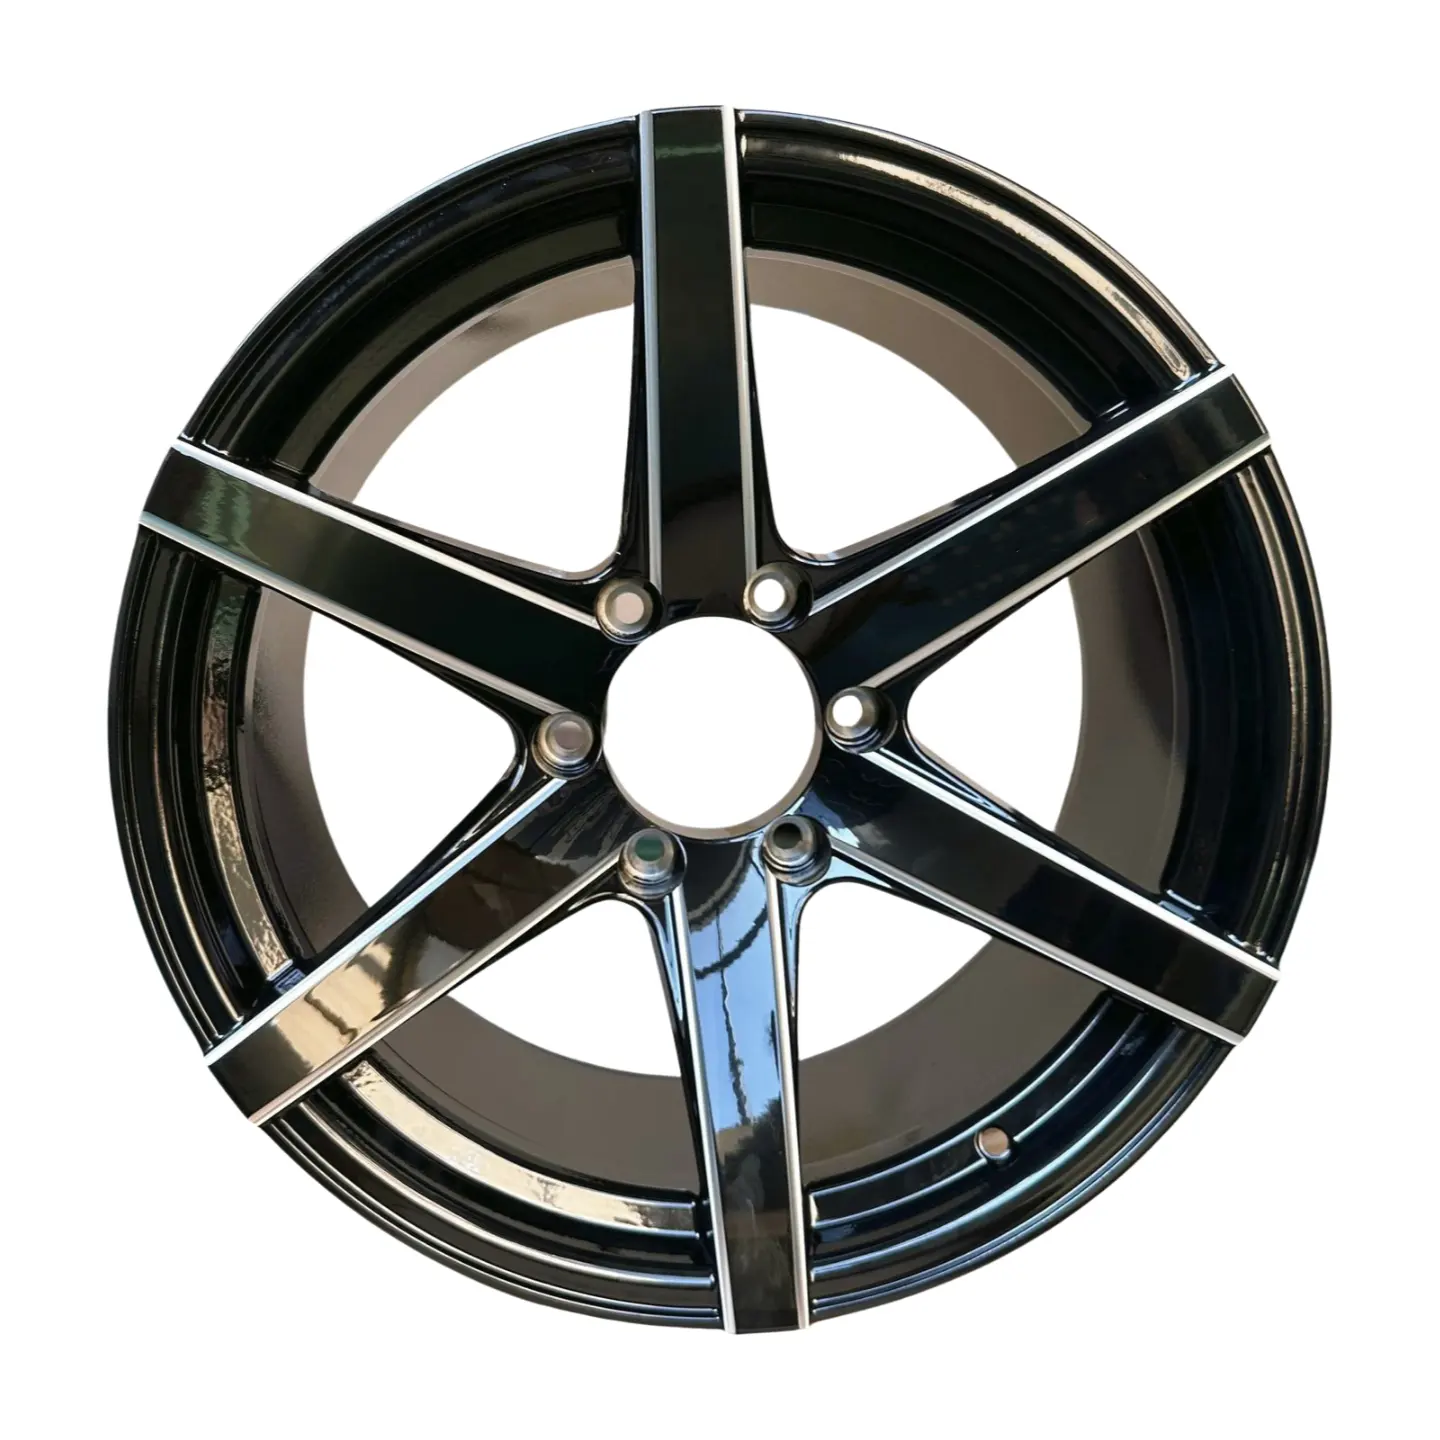 18x9.5 אינץ 'חם מכירה גלגלים עם pcd 6x139.7 ruk מתאים גלגל סגסוגת עיצוב יפני כרסום שחור